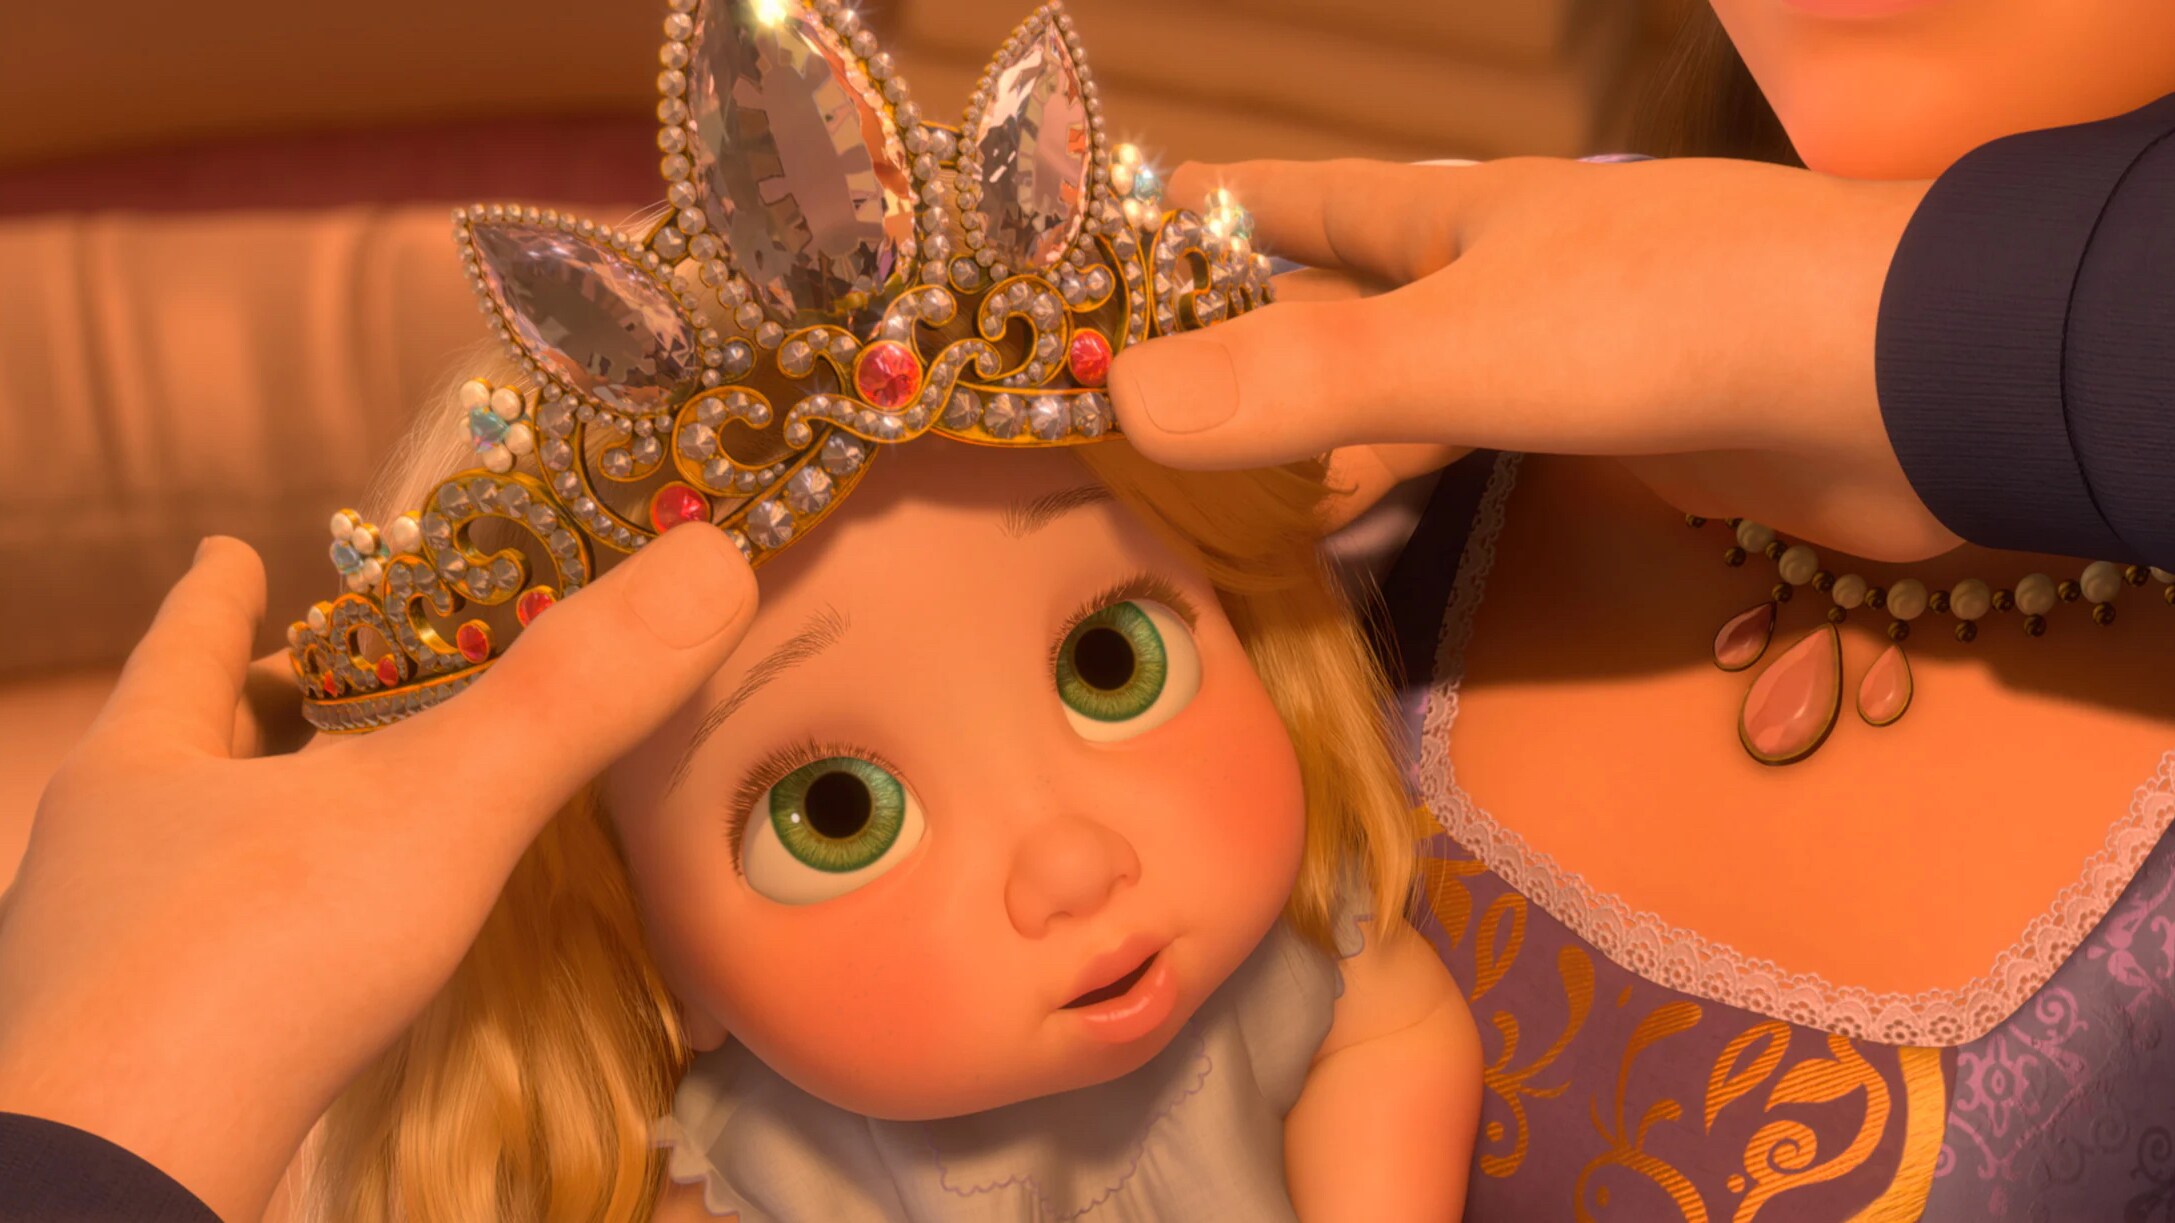 Baby Rapunzel getting her princess crown.